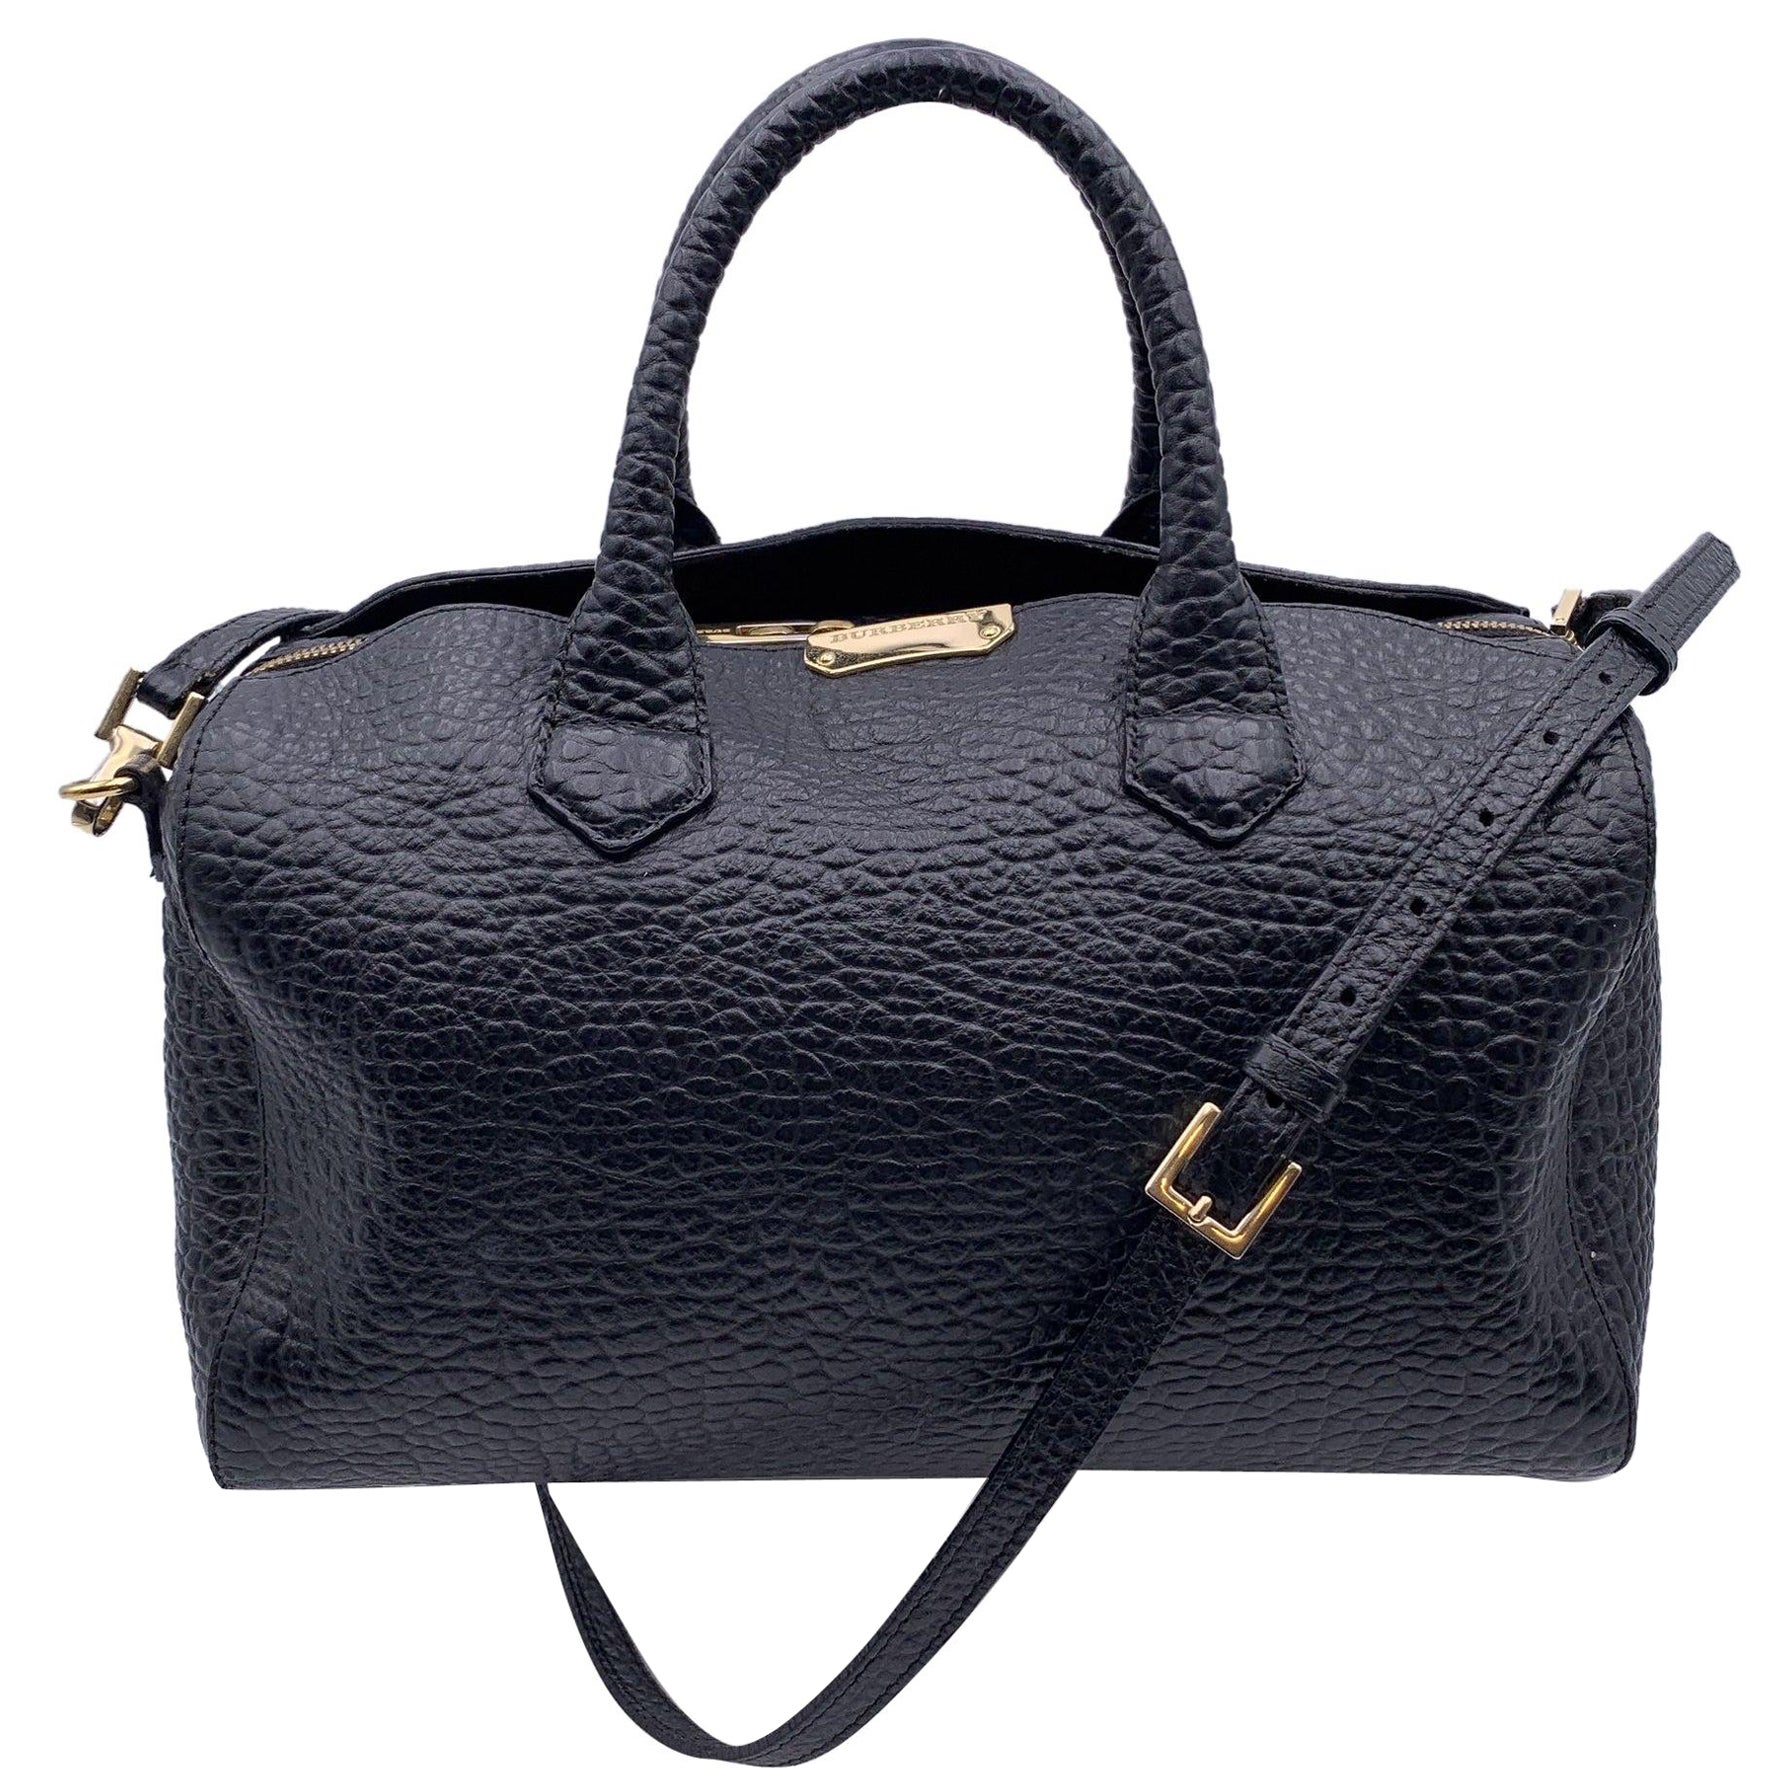 Burberry Black Pebbled Leather Handbag Boston Bag with Strap